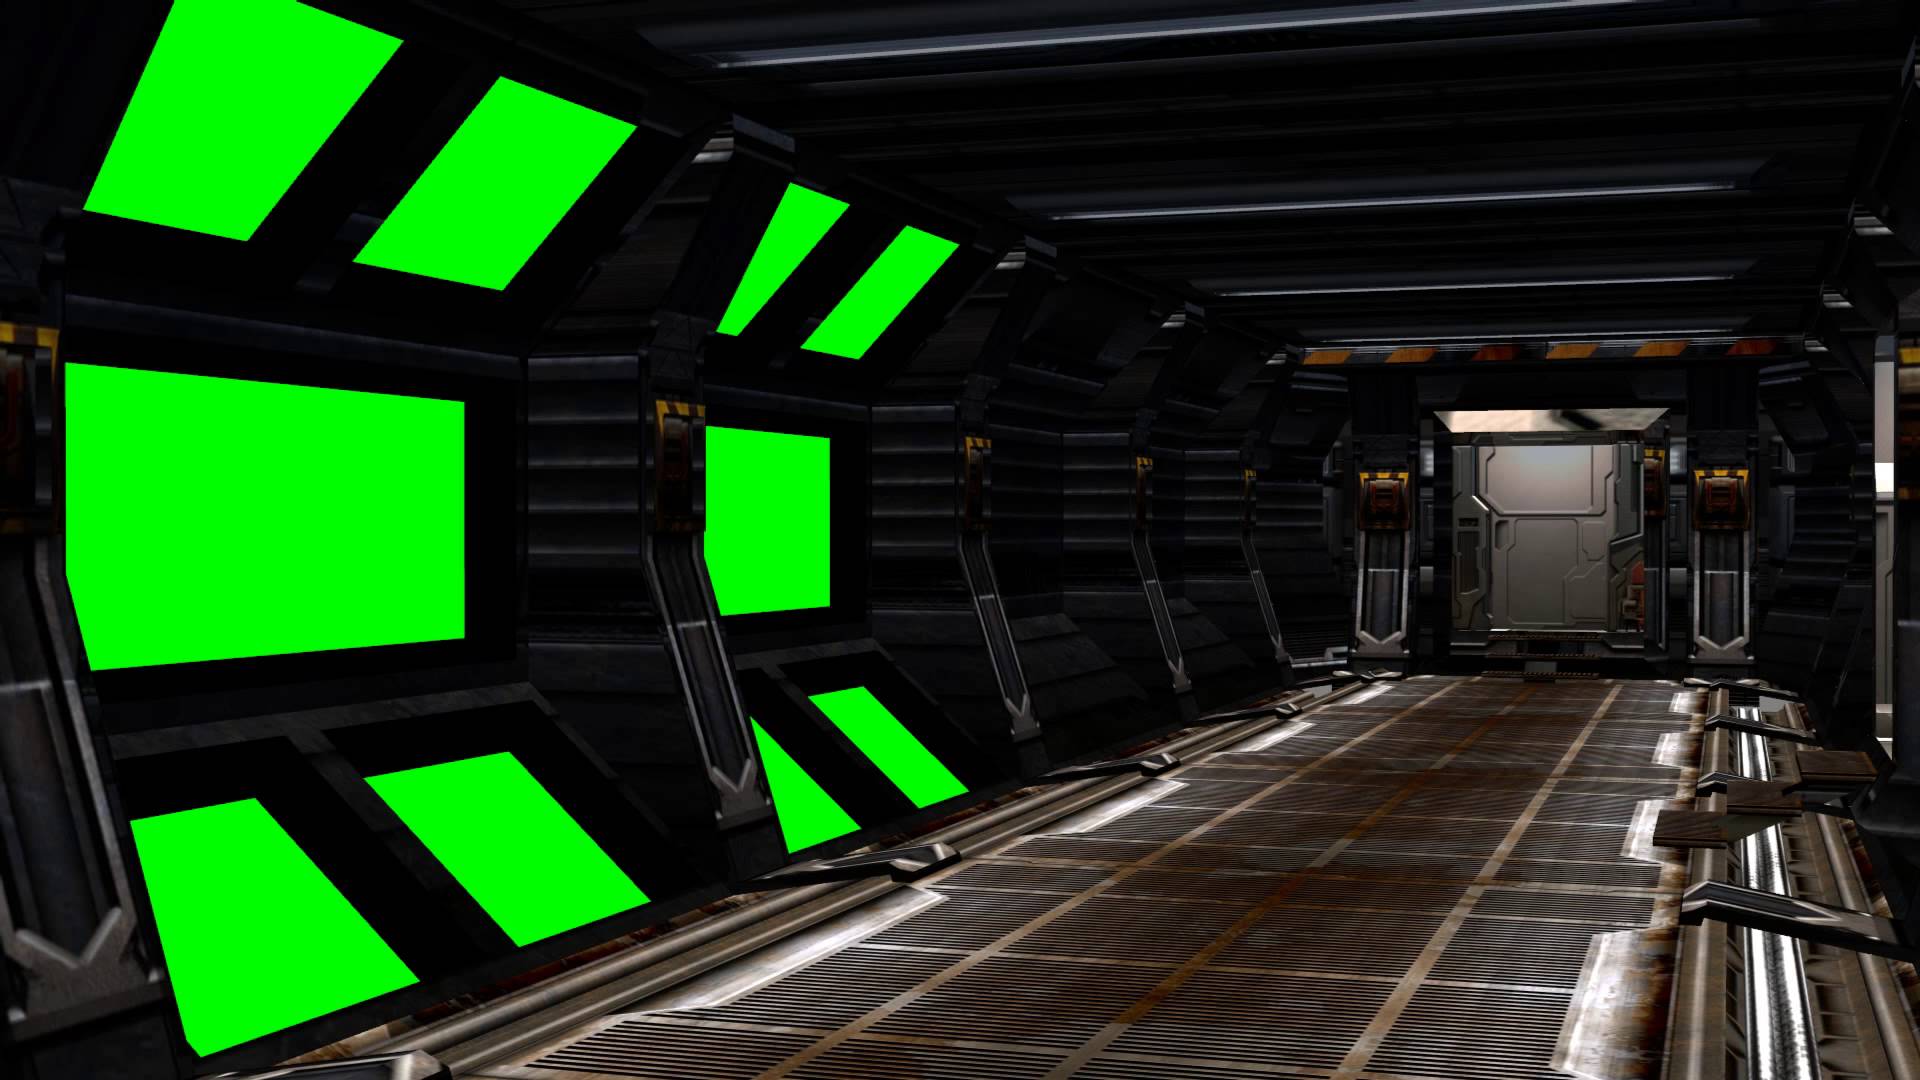 Spaceship Interior With Sound Green Screen Set A